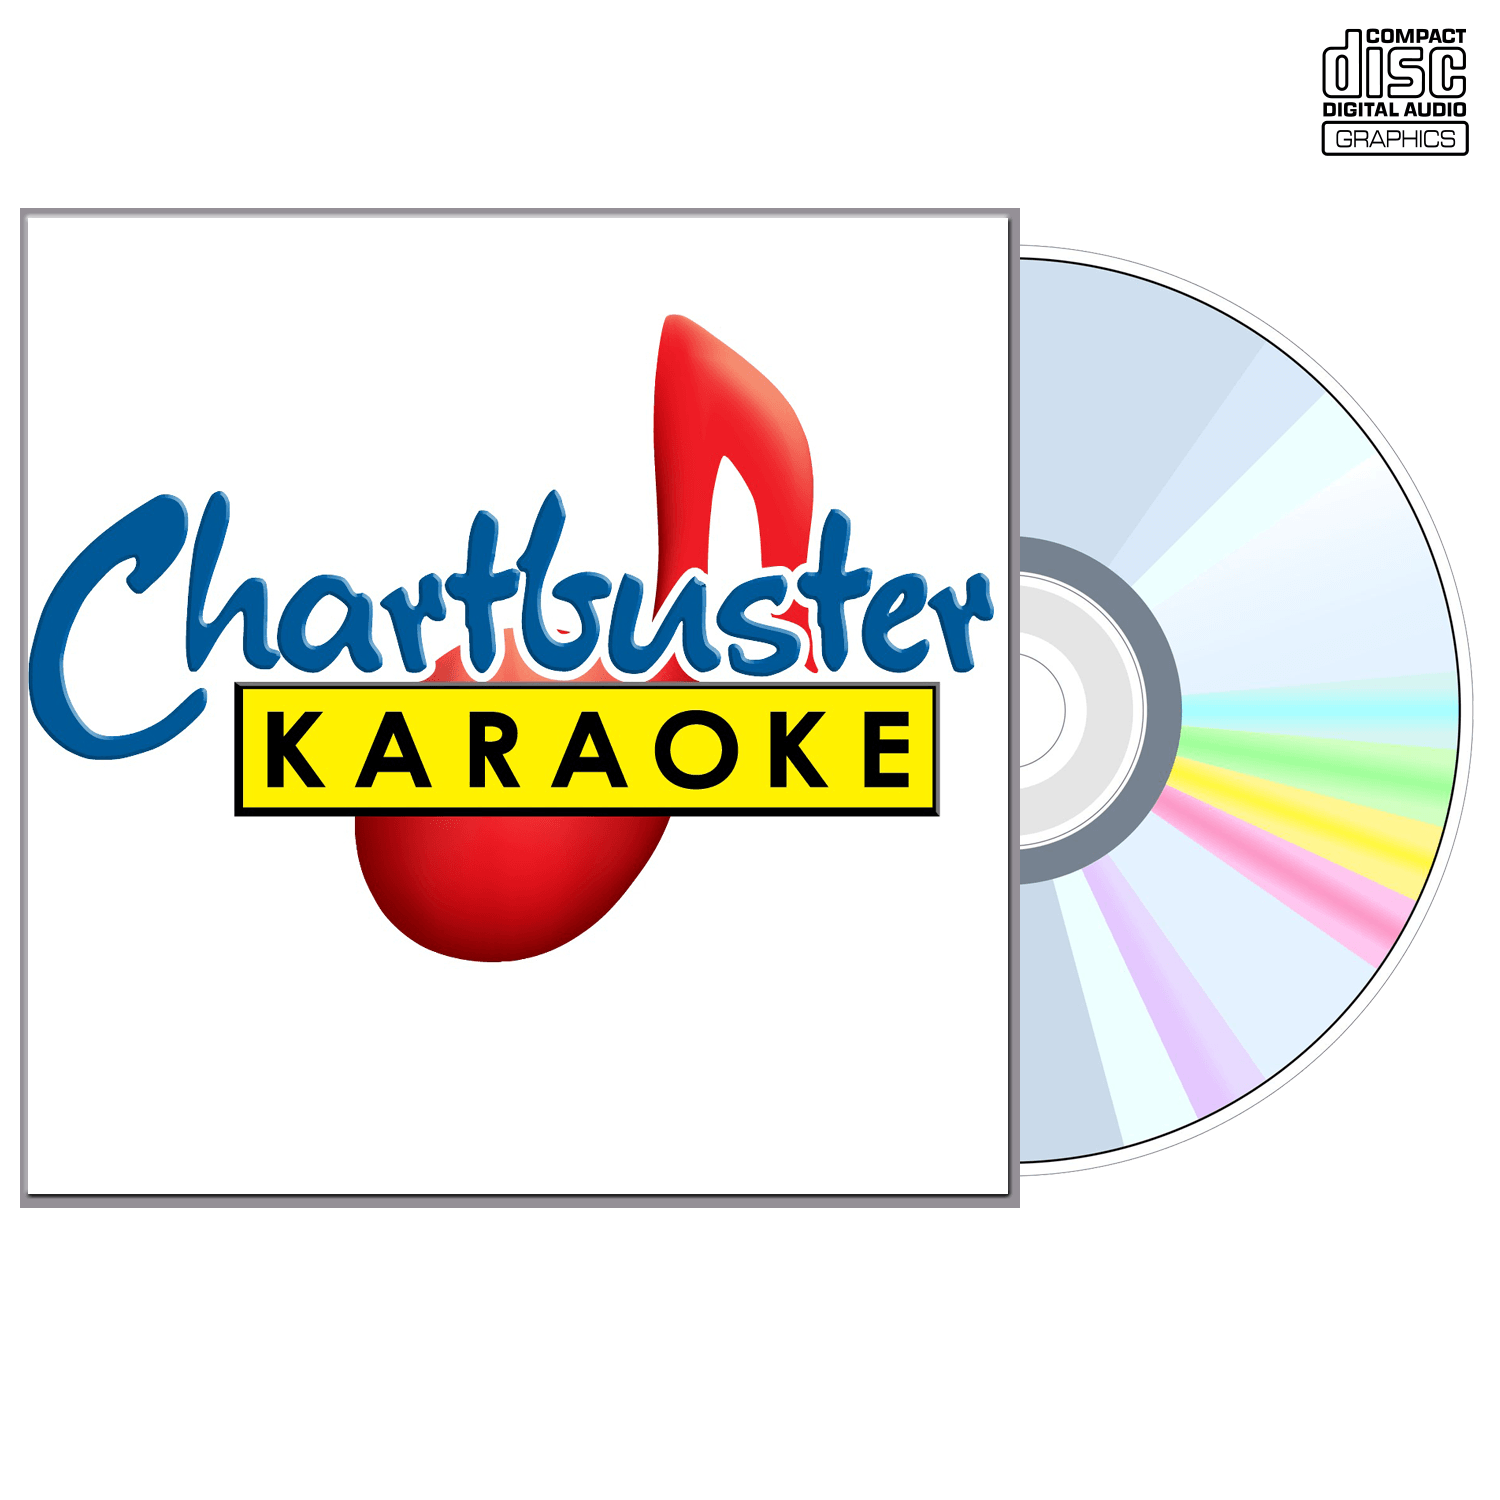 Garth Brooks Vol 1 - CD+G - Chartbuster Karaoke - Karaoke Home Entertainment